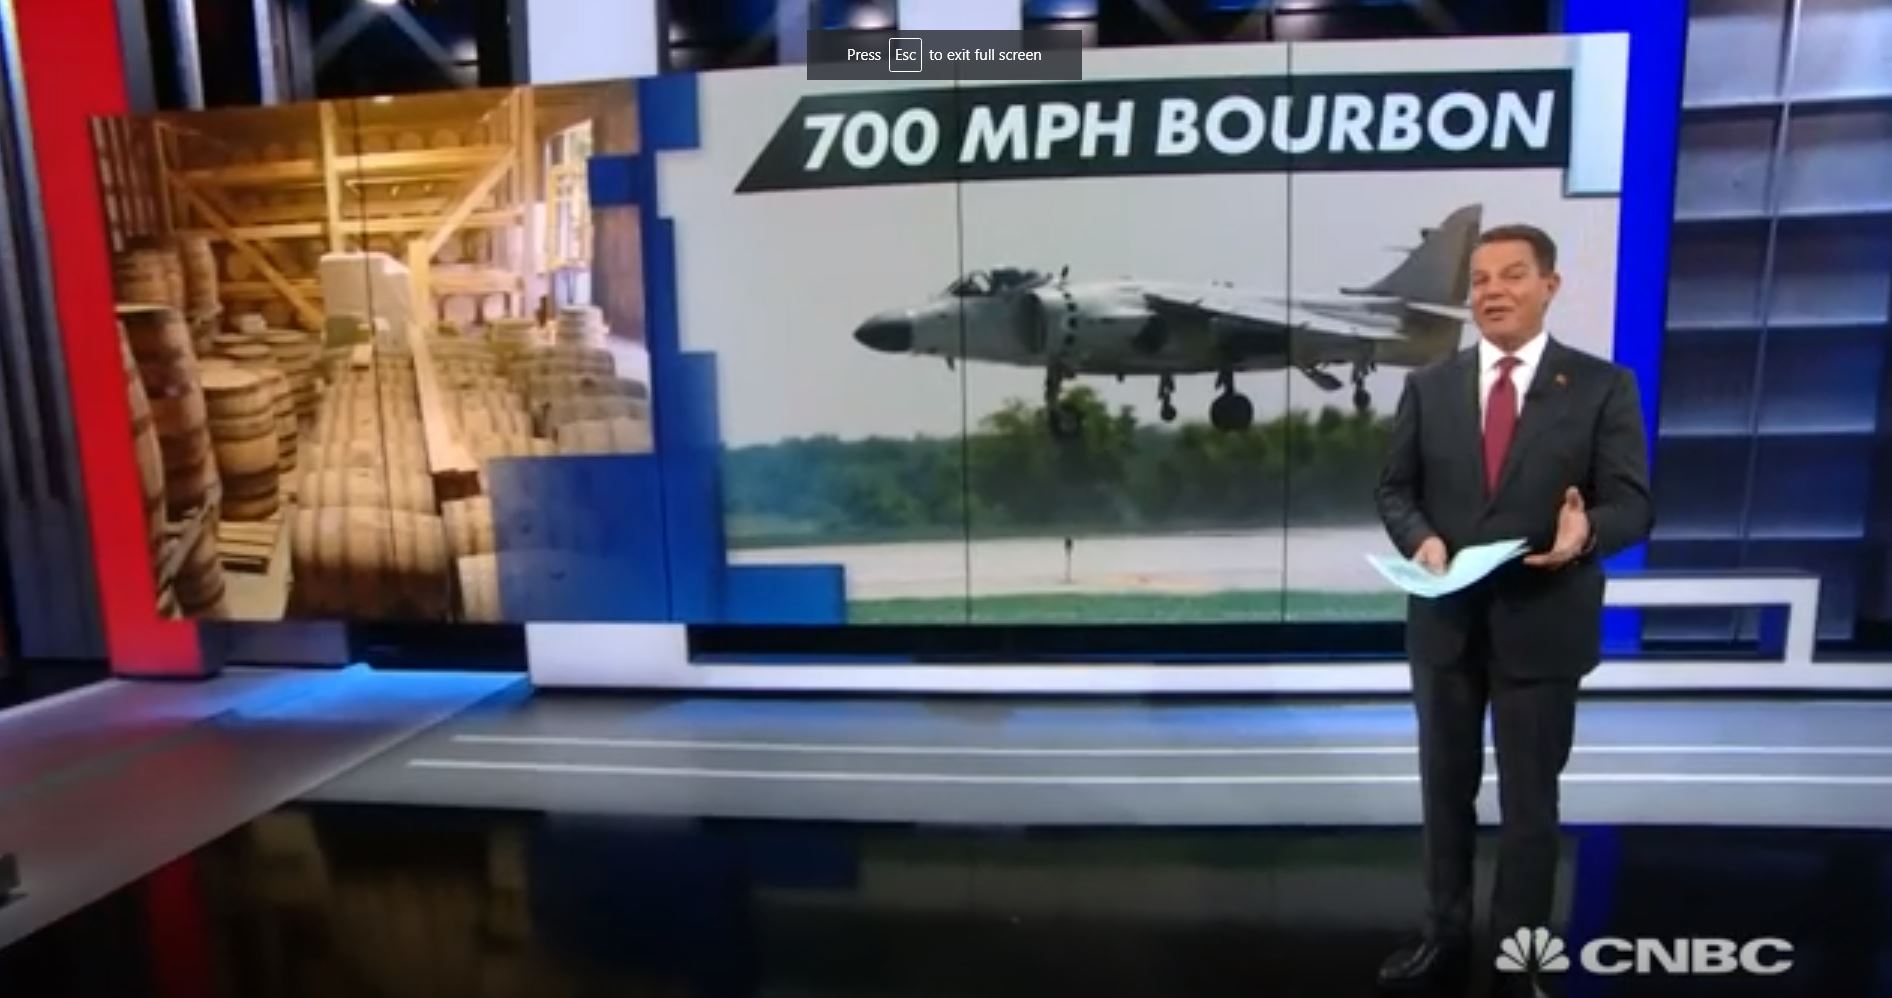 700MPH bourbon on CNBC news